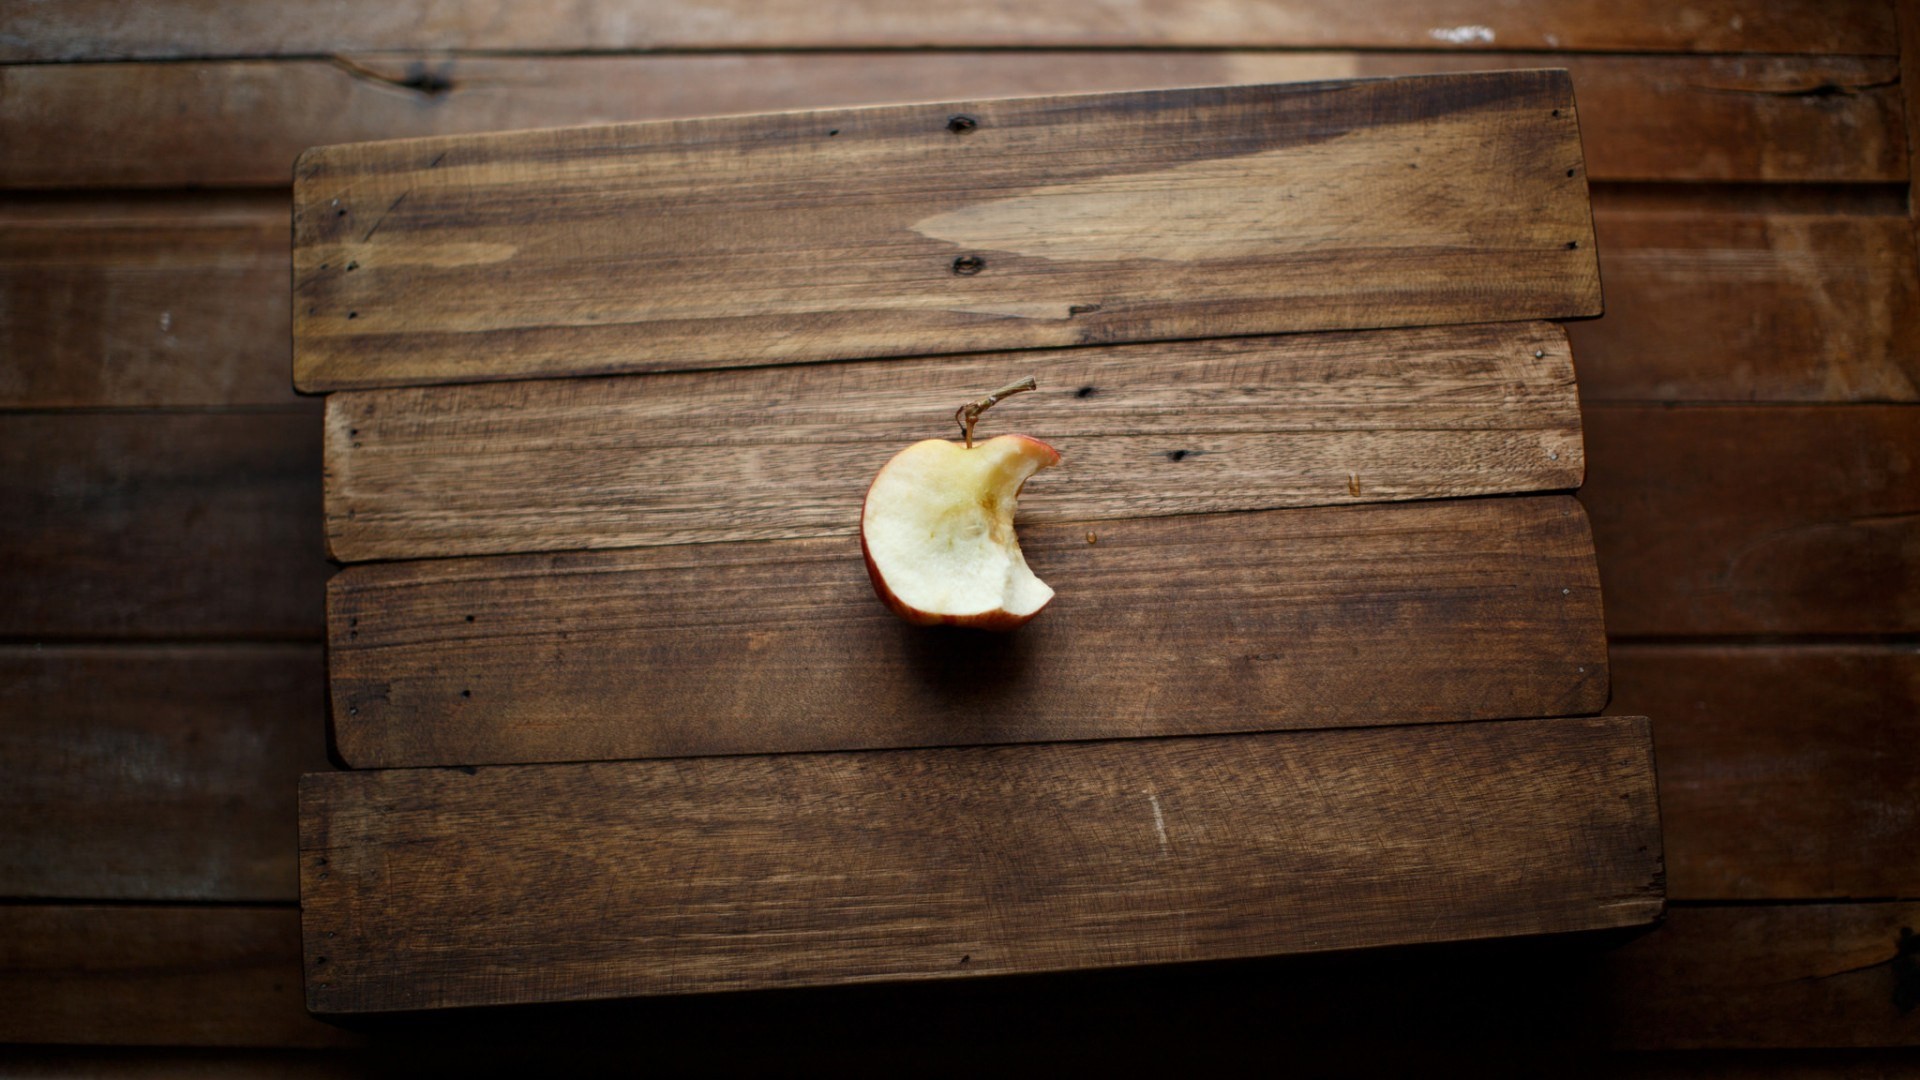 General 1920x1080 wood wooden surface fruit apples planks wood planks depth of field creativity food